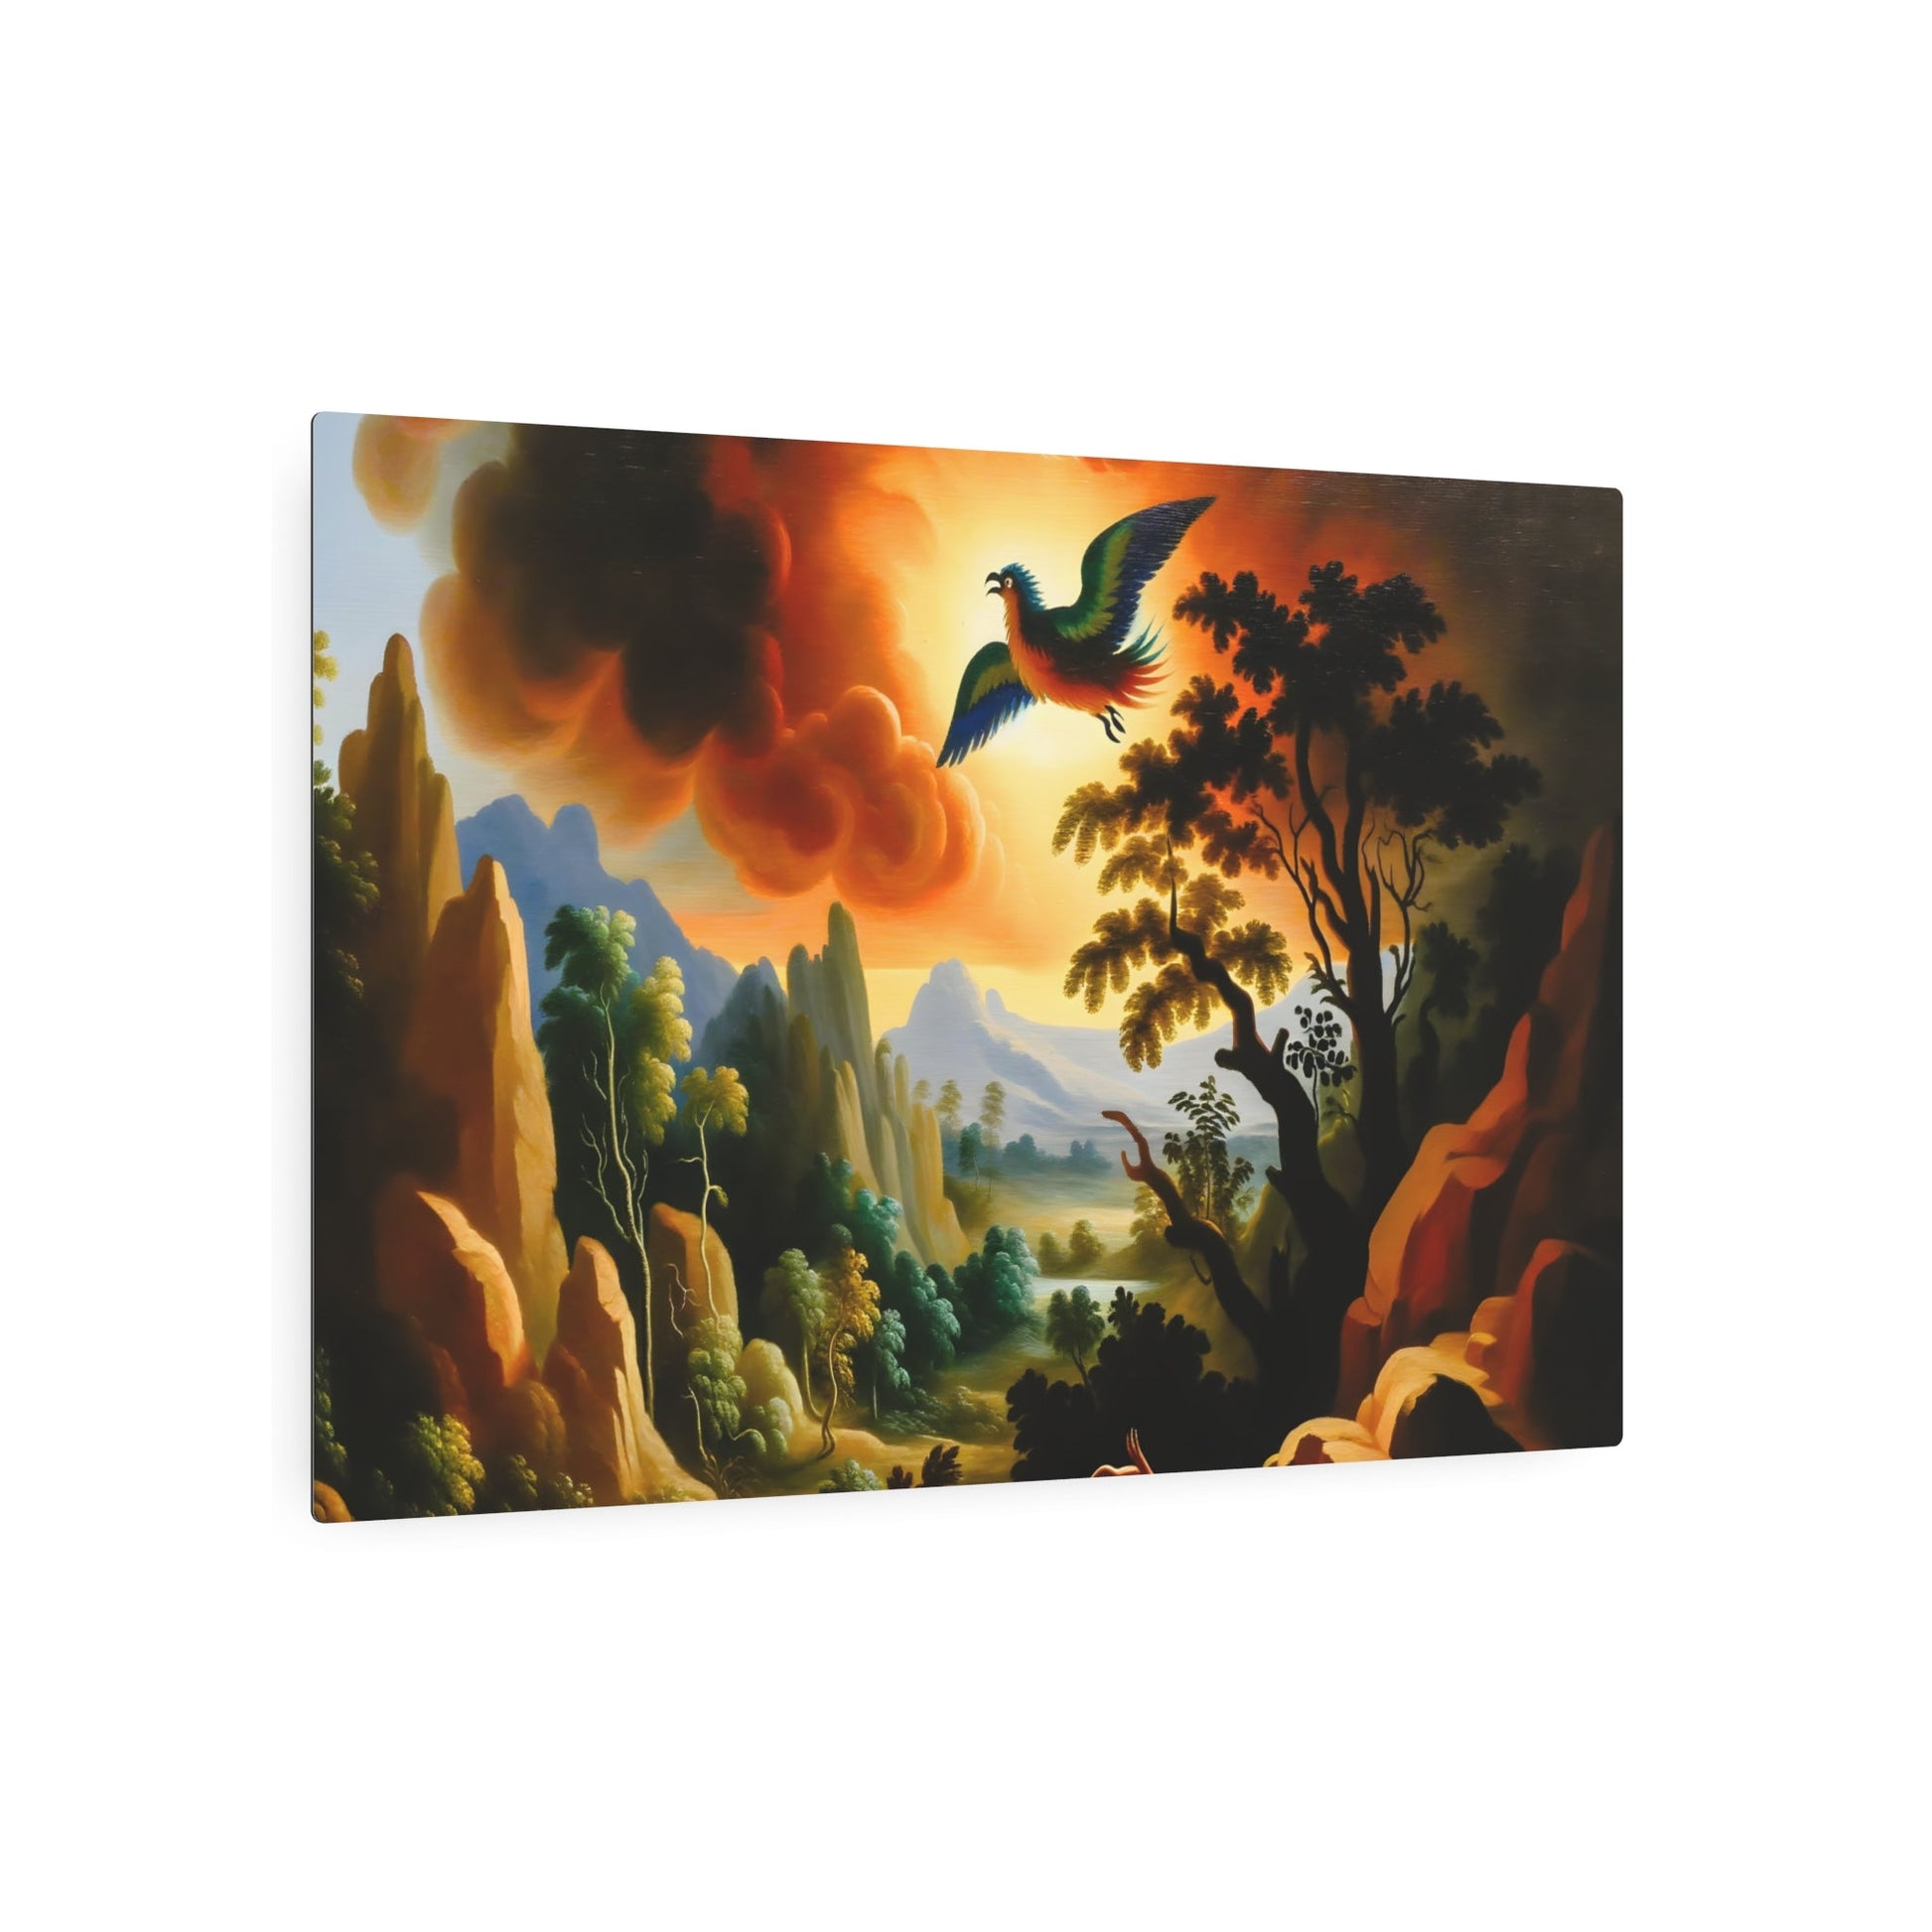 Metal Poster Art | "Romanticism Western Art Style - Vibrant Bird in Sunset Landscape Painting" - Metal Poster Art 36″ x 24″ (Horizontal) 0.12''